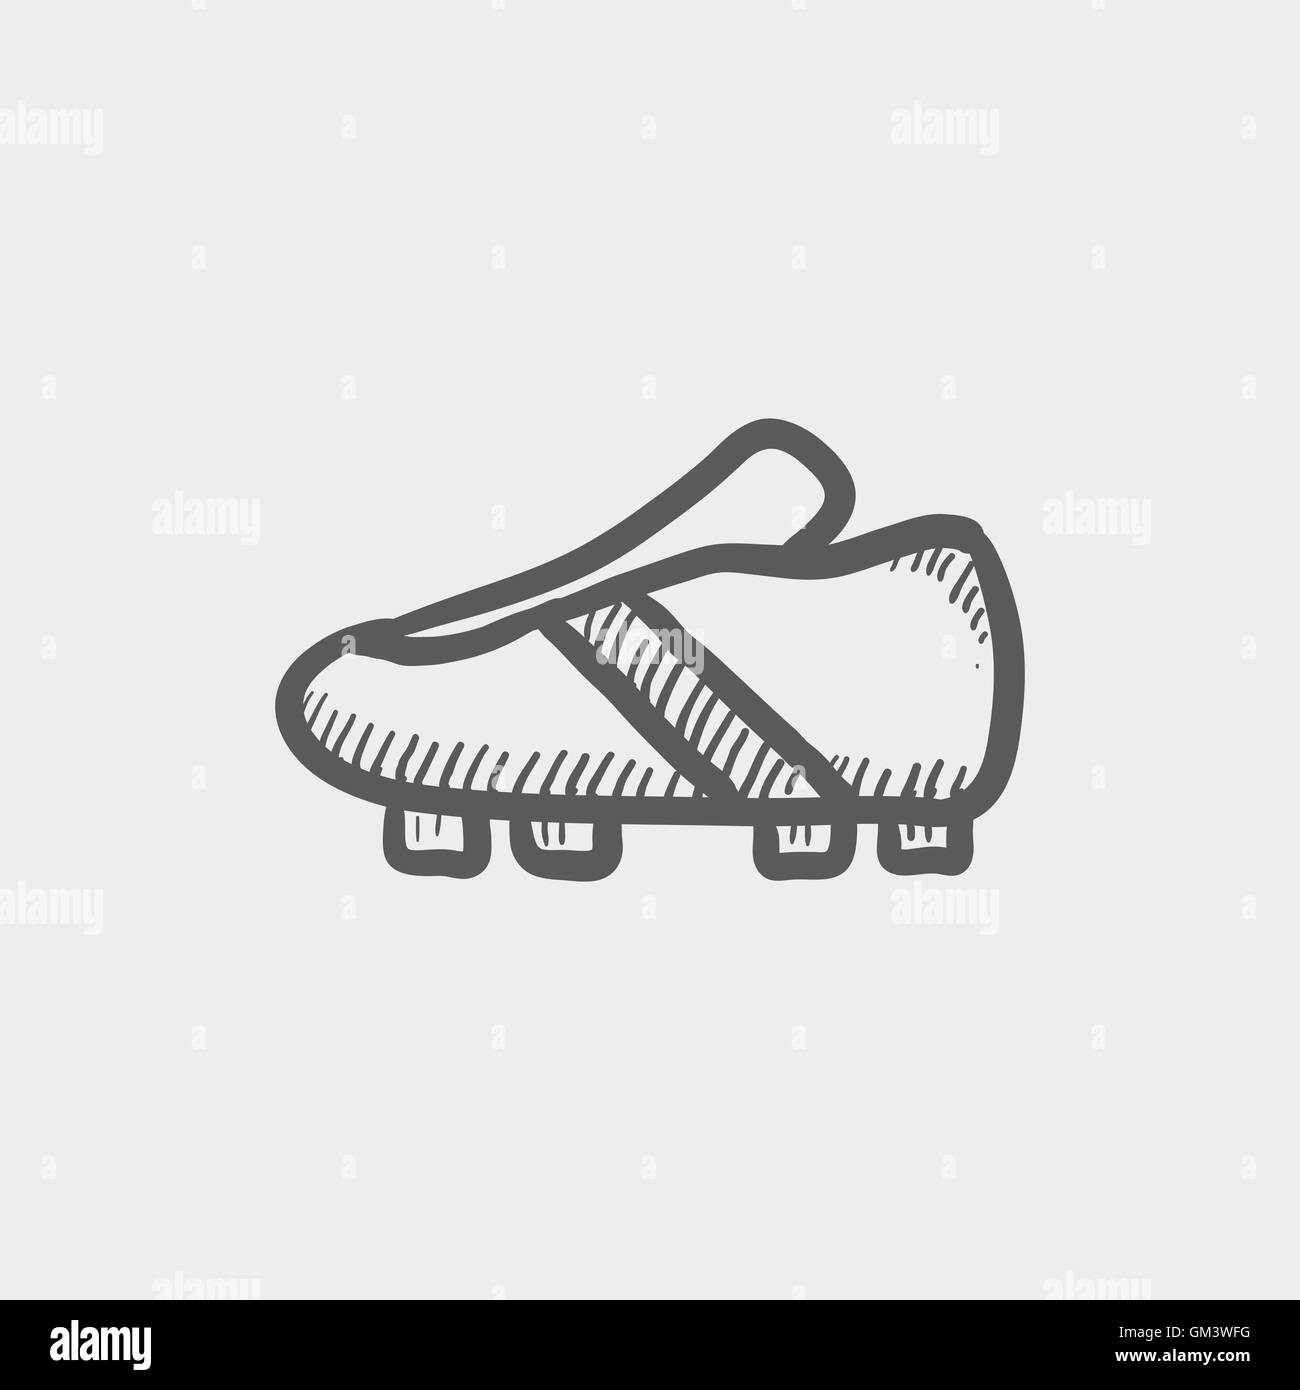 1400 Soccer Shoe Illustrations RoyaltyFree Vector Graphics  Clip Art   iStock  Soccer shoe icon 3d soccer shoe